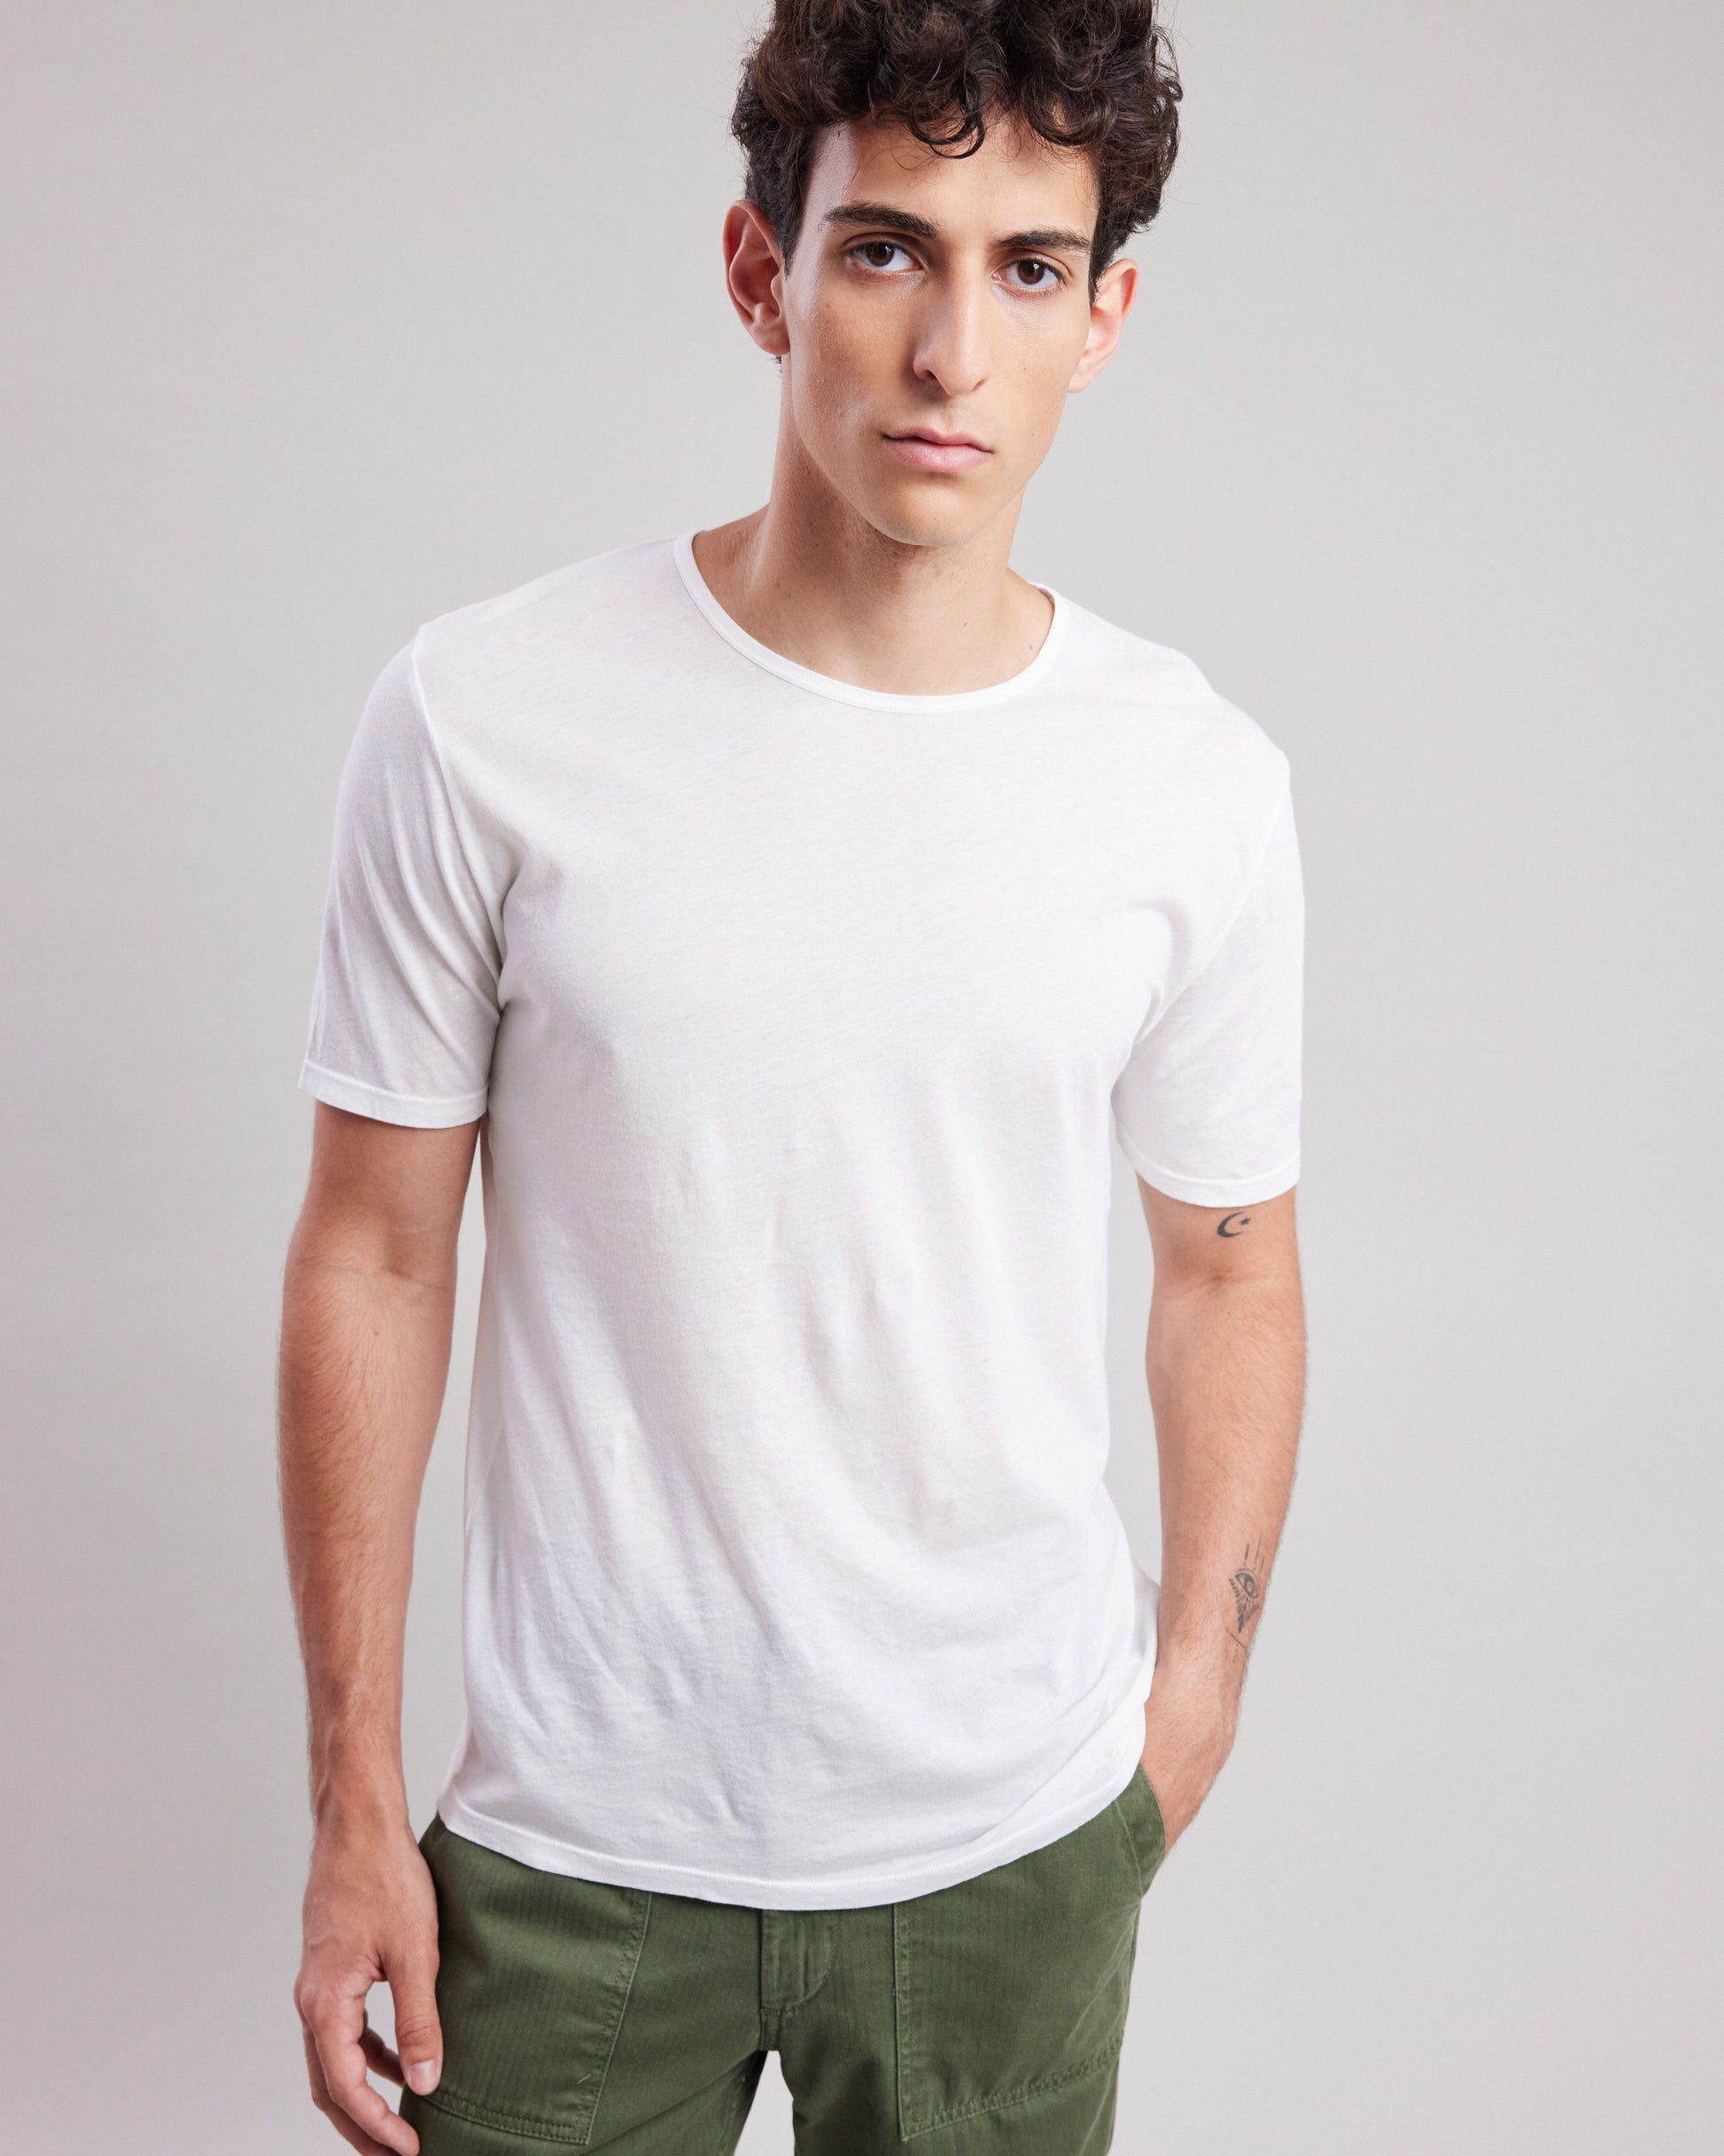 Tee shirt Homme en jersey de coton léger Blanc Light Crew BC62301-01